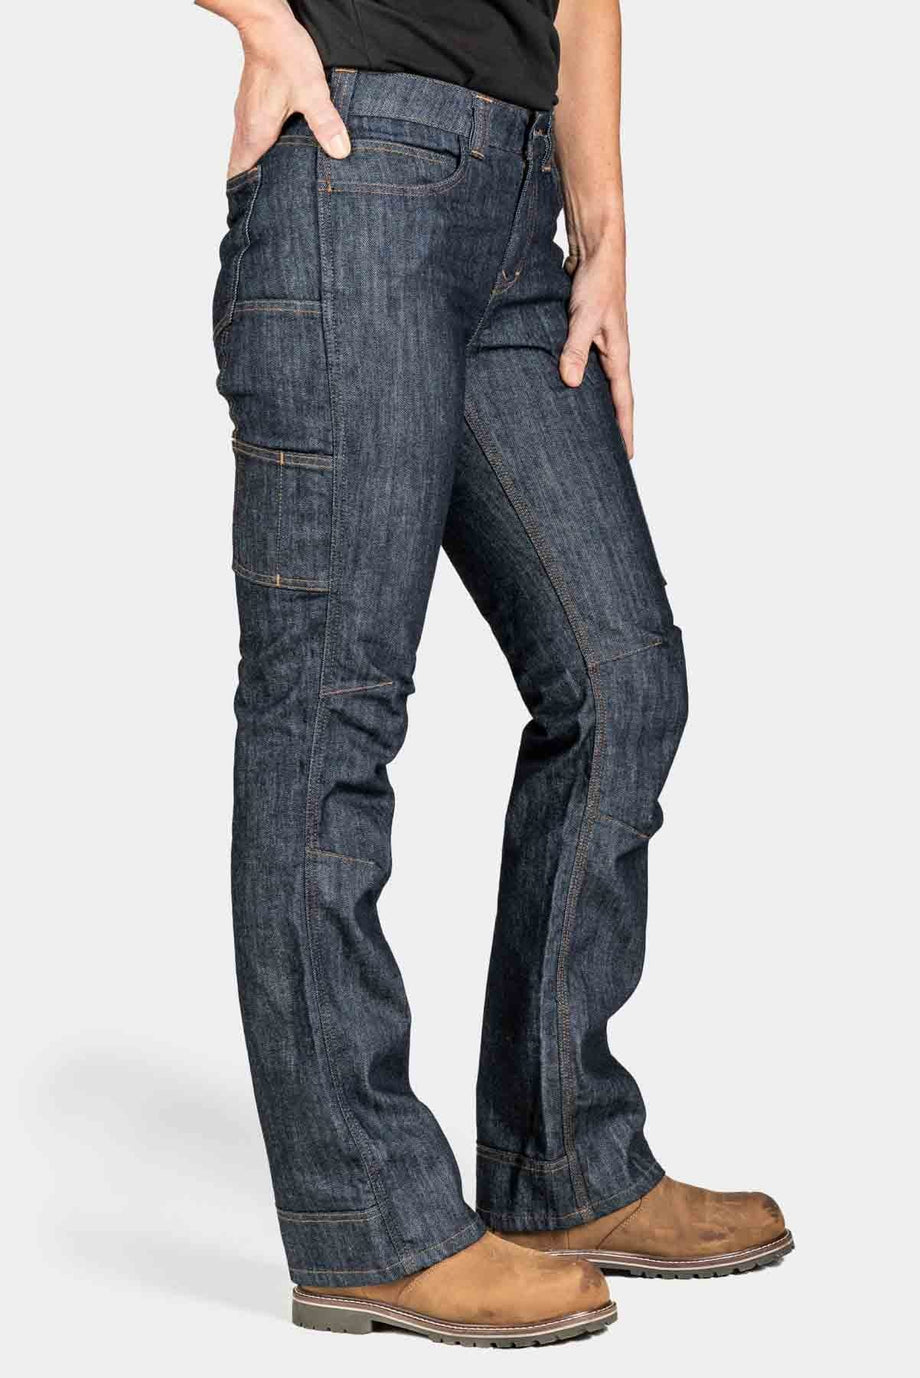 Women's Low Cut Hipster Jeans Bootcut Black Jeans Pants + Belt Size  6,8,10,12,14